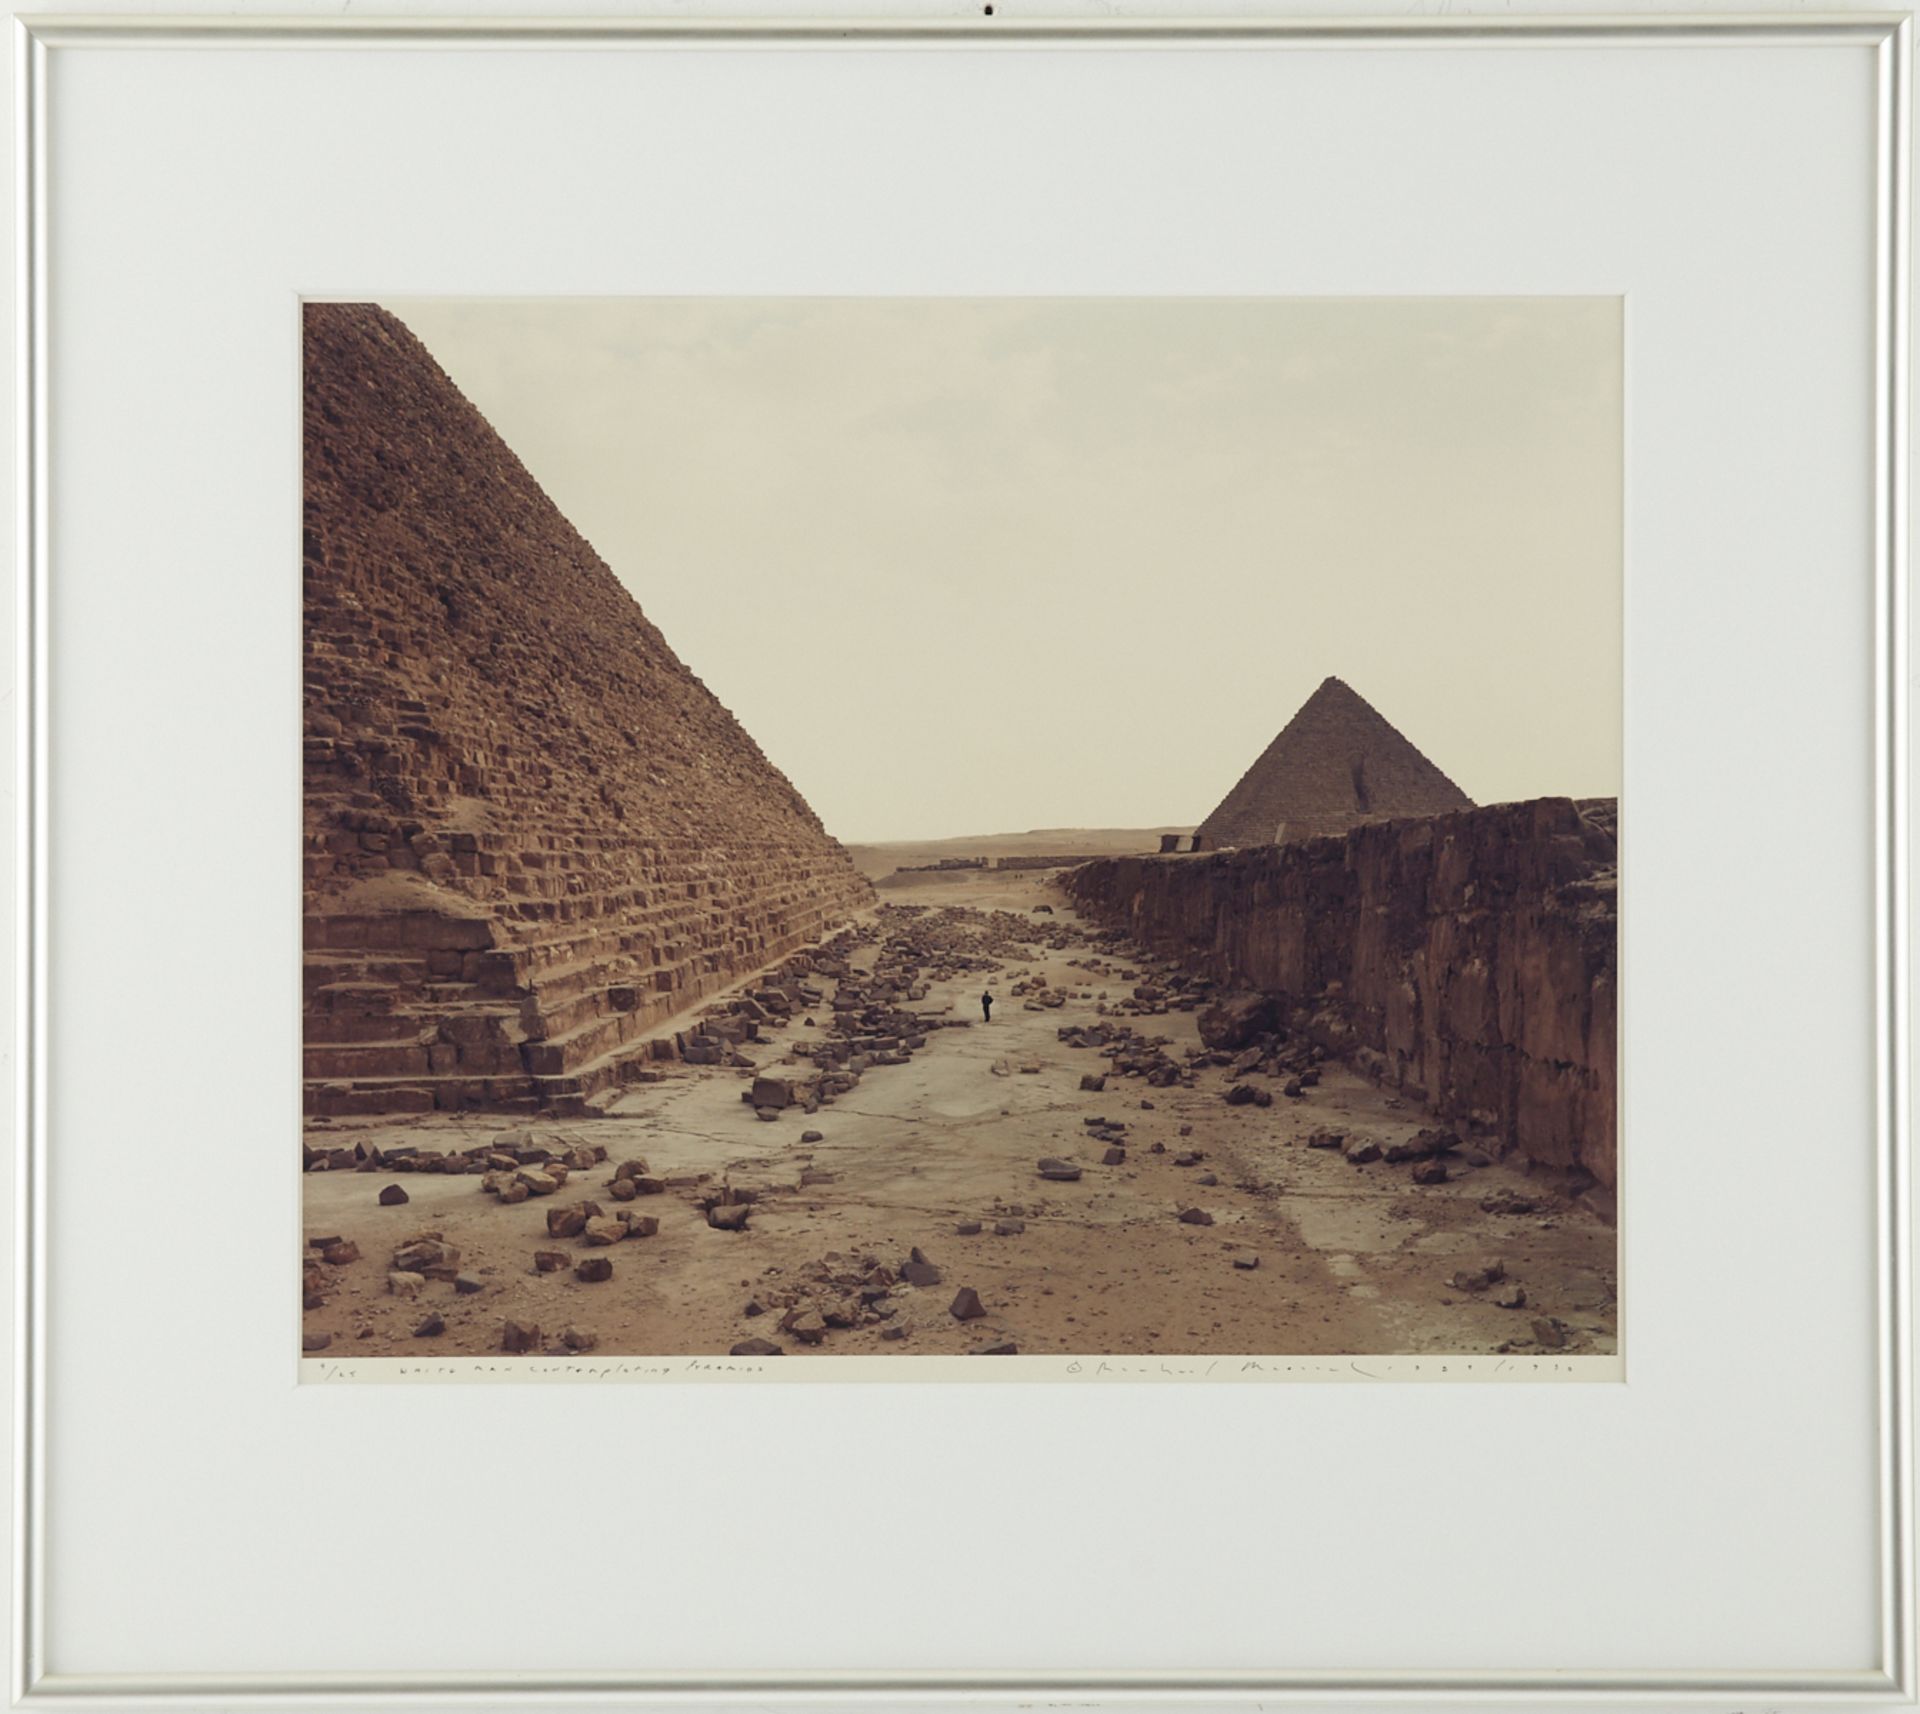 Richard Misrach "White Man Contemplating Pyramids" Photograph - Image 2 of 4